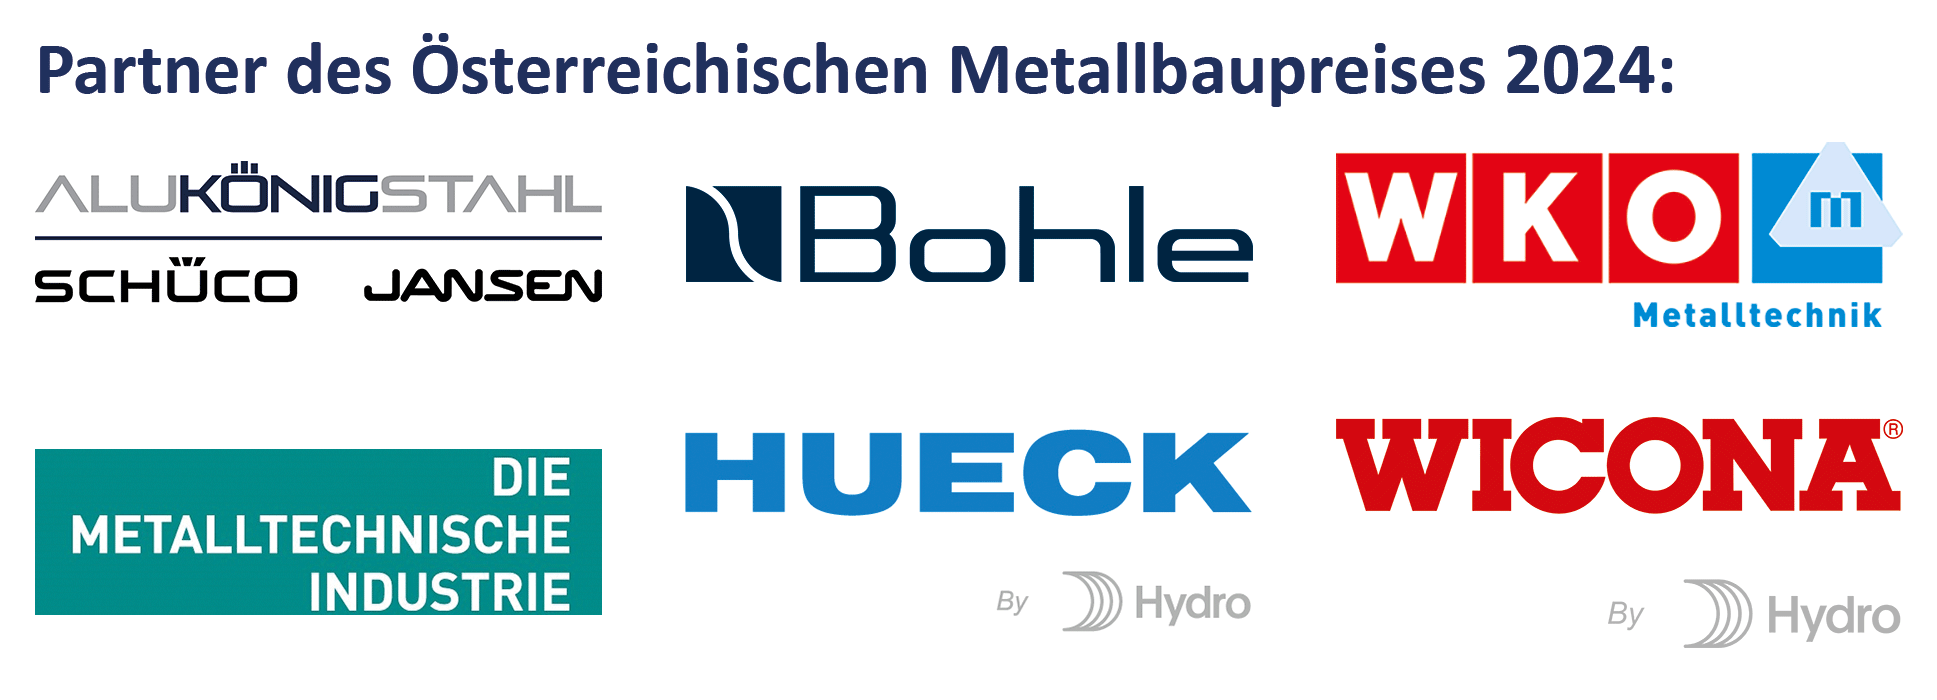 Logos der Partner des Metallbaupreises 2024